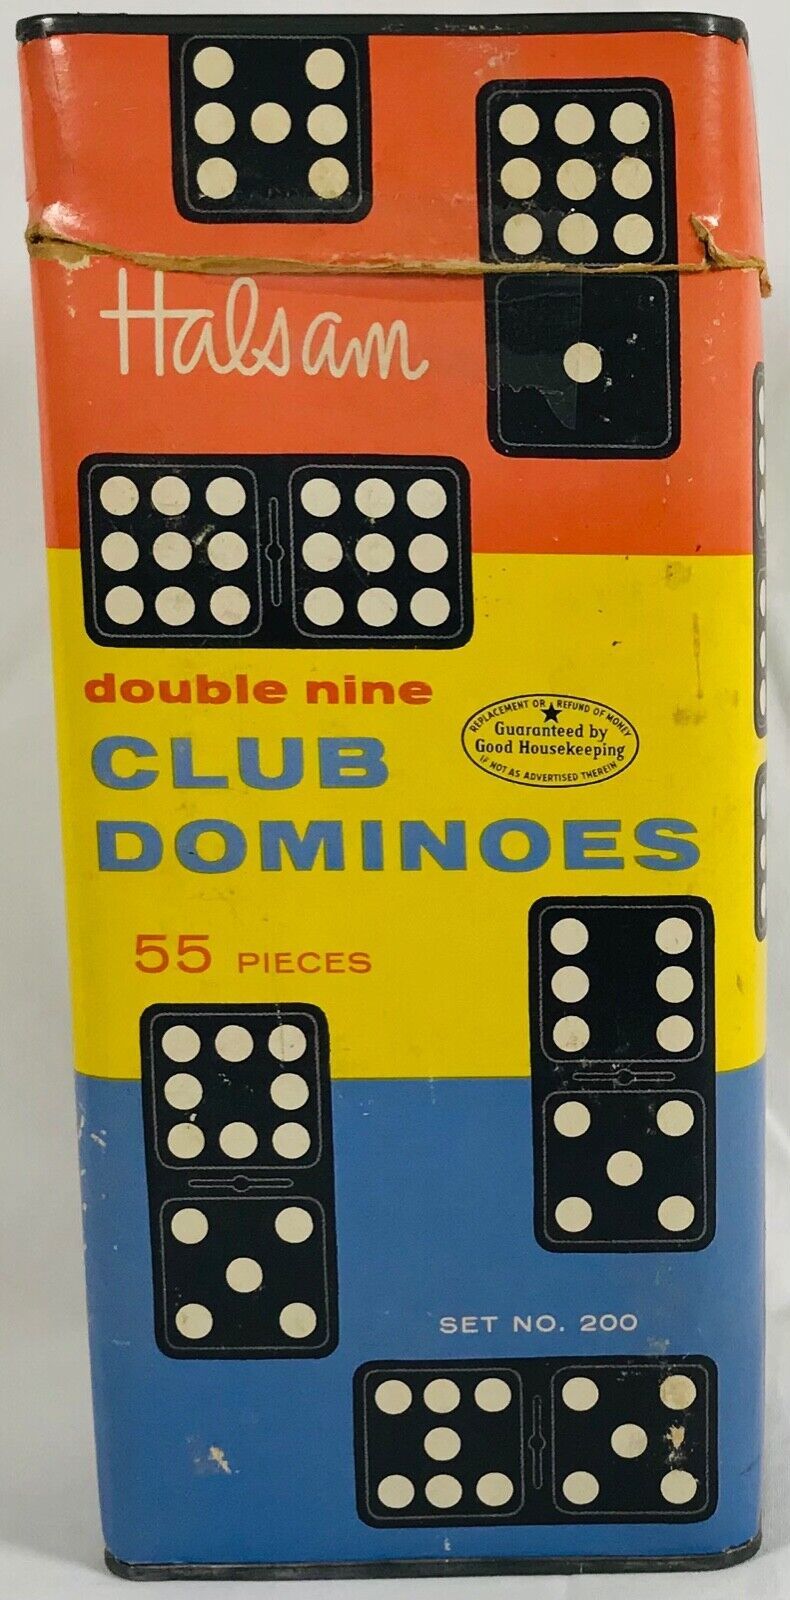  VINTAGE HALSAM Double Nine CLUB DOMINOES SET NO. 200 - Box Good Color - $12.82